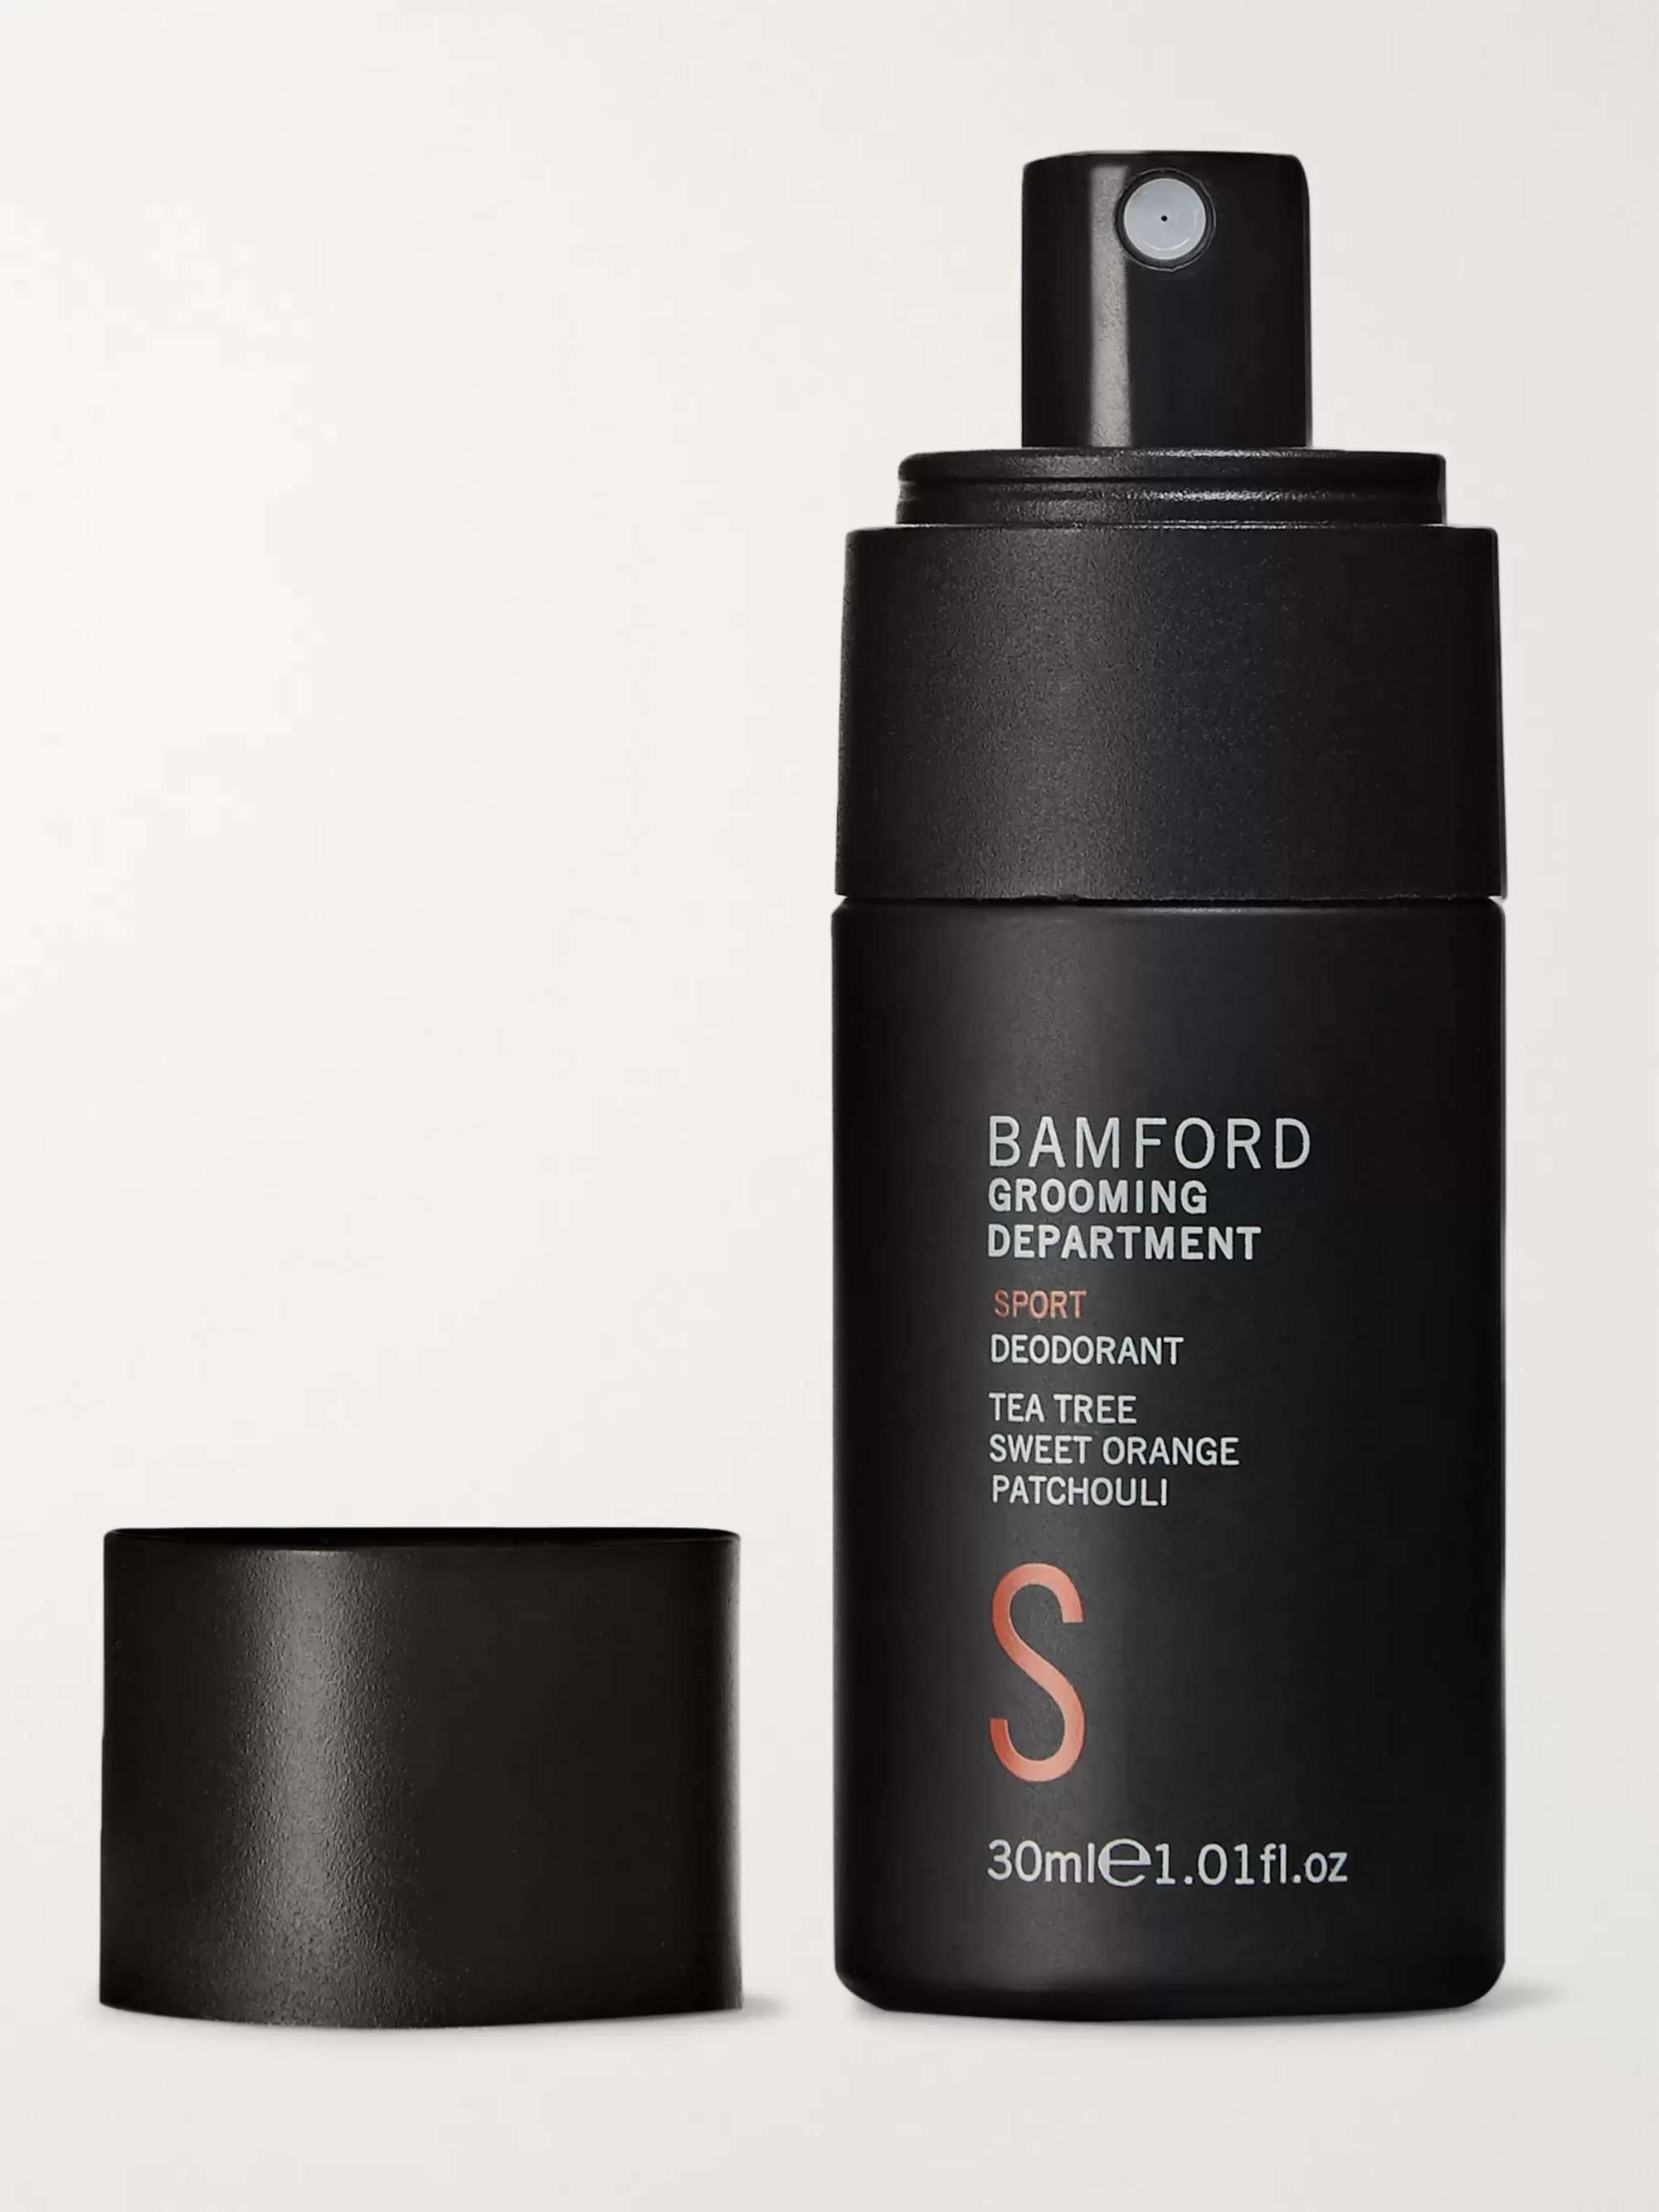 Bamford Grooming Department BGD Sport Deodorant, 30ml